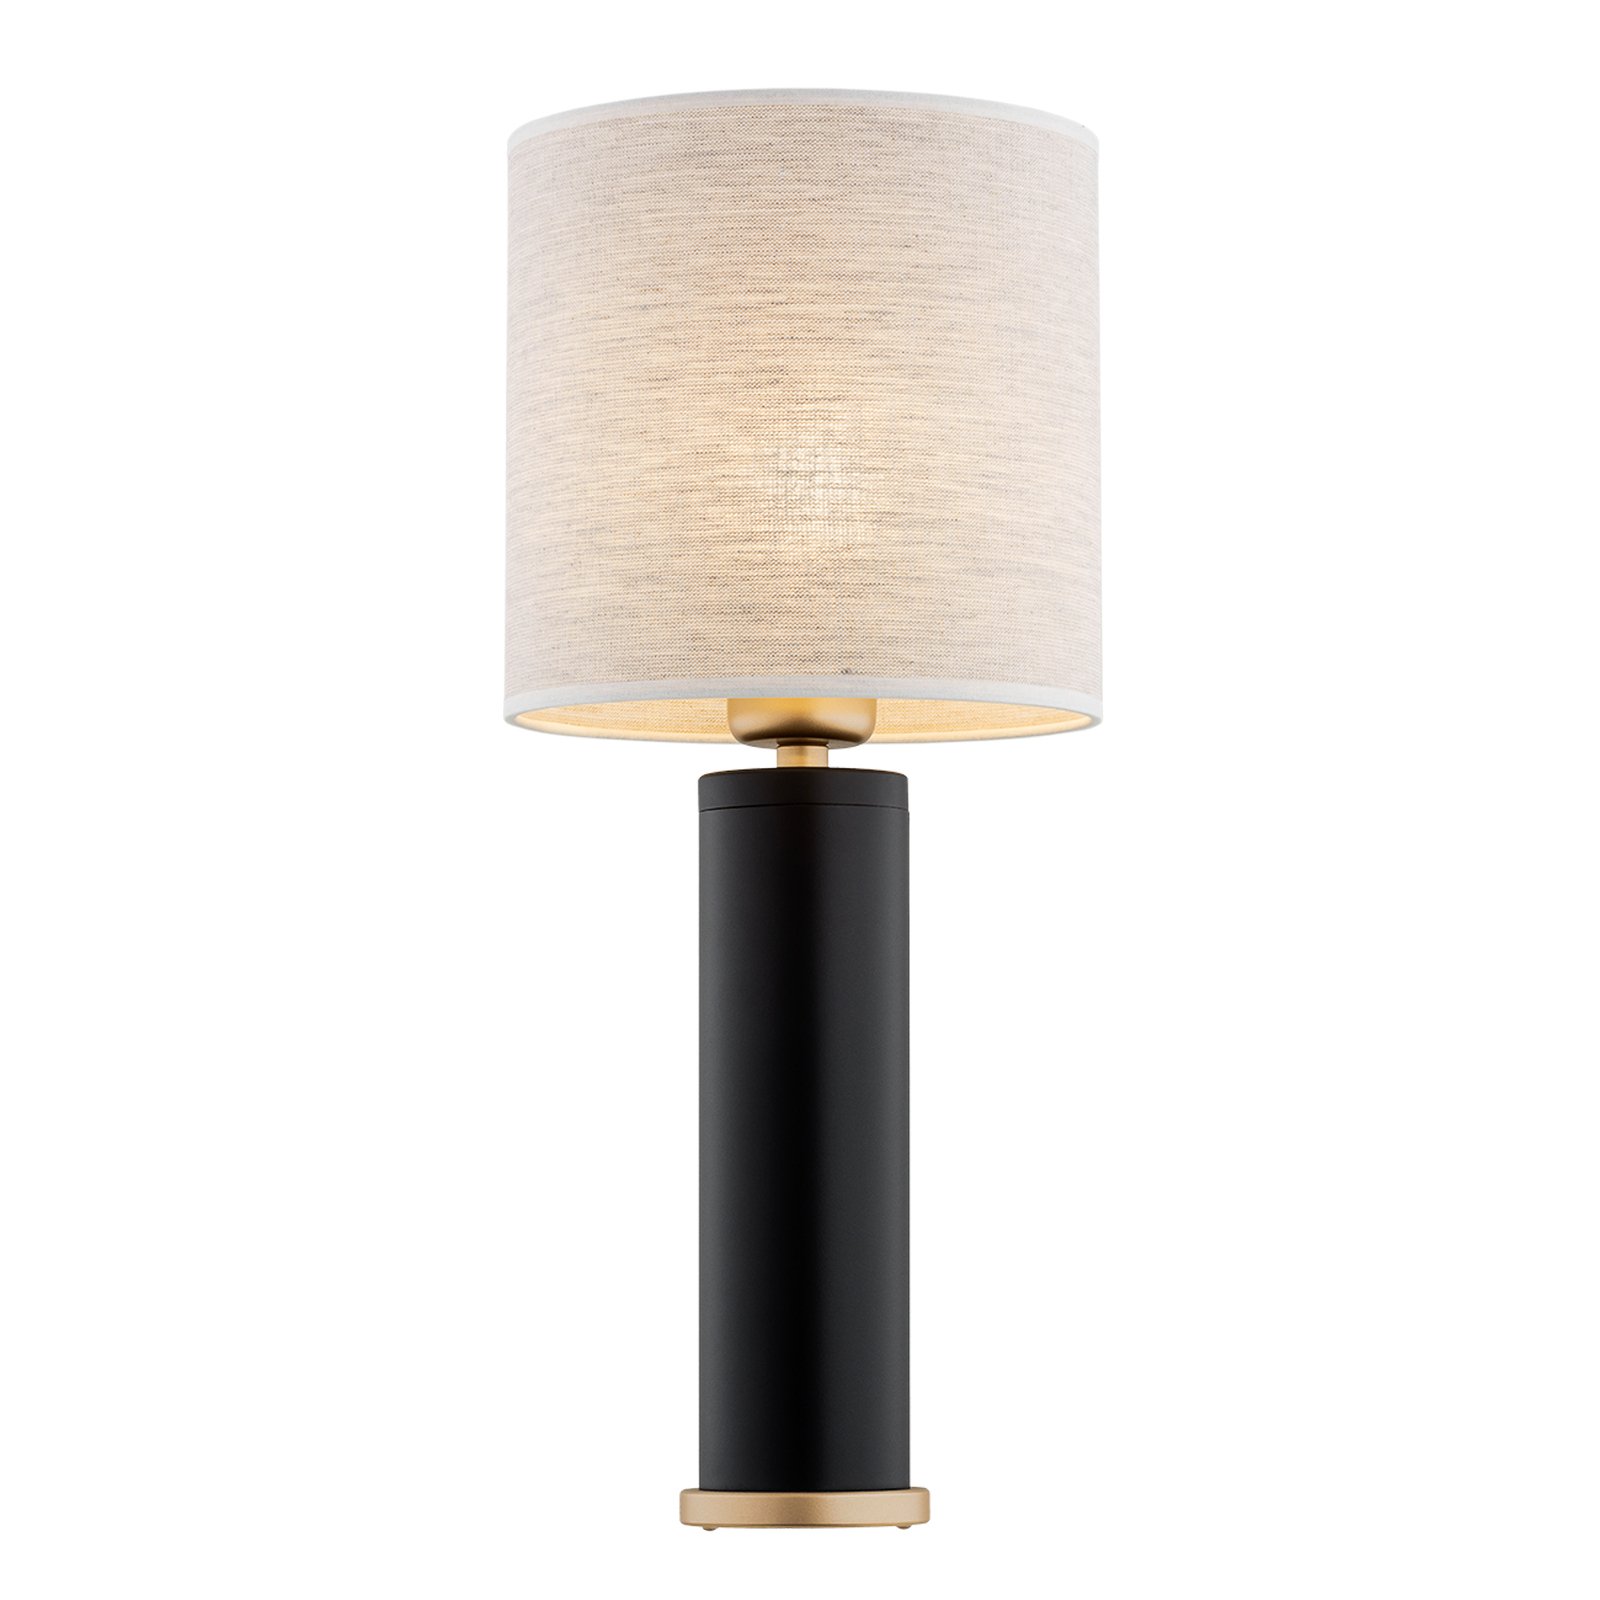 Romina table lamp, linen lampshade, black base